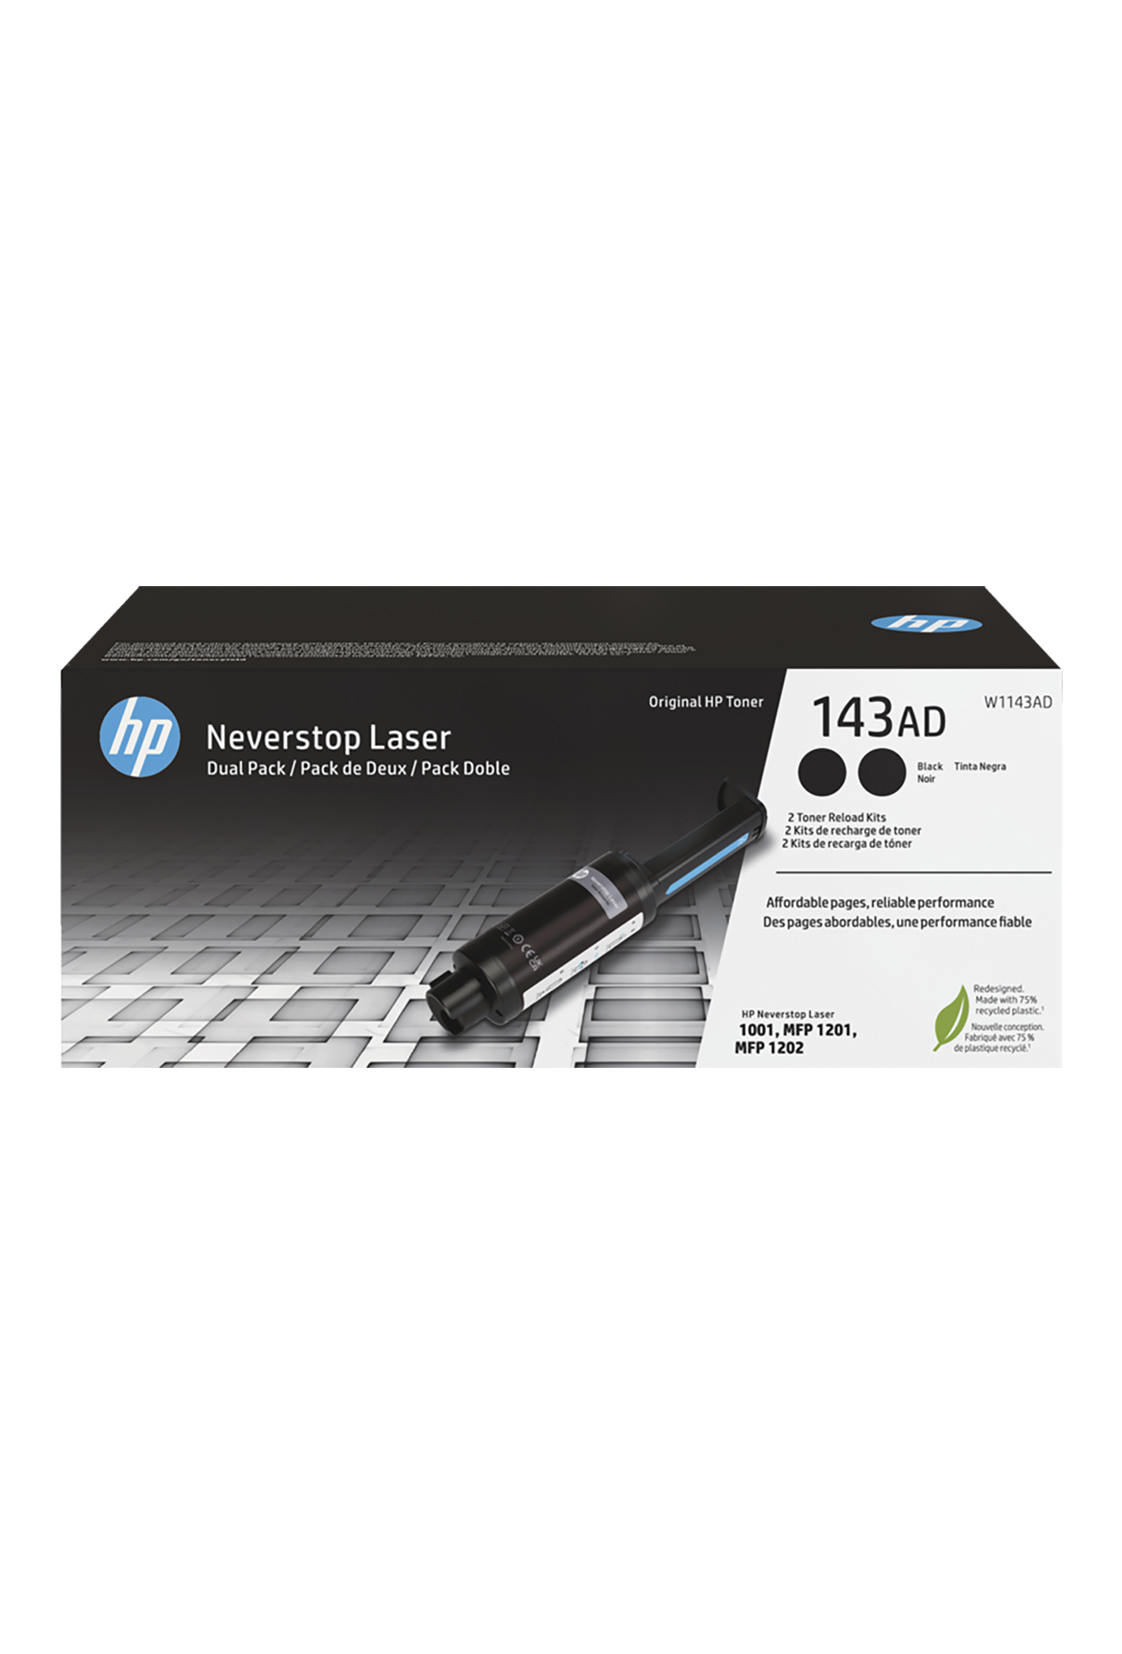 HP W1143AD Neverstop Laser täyttöpakkaus x 2